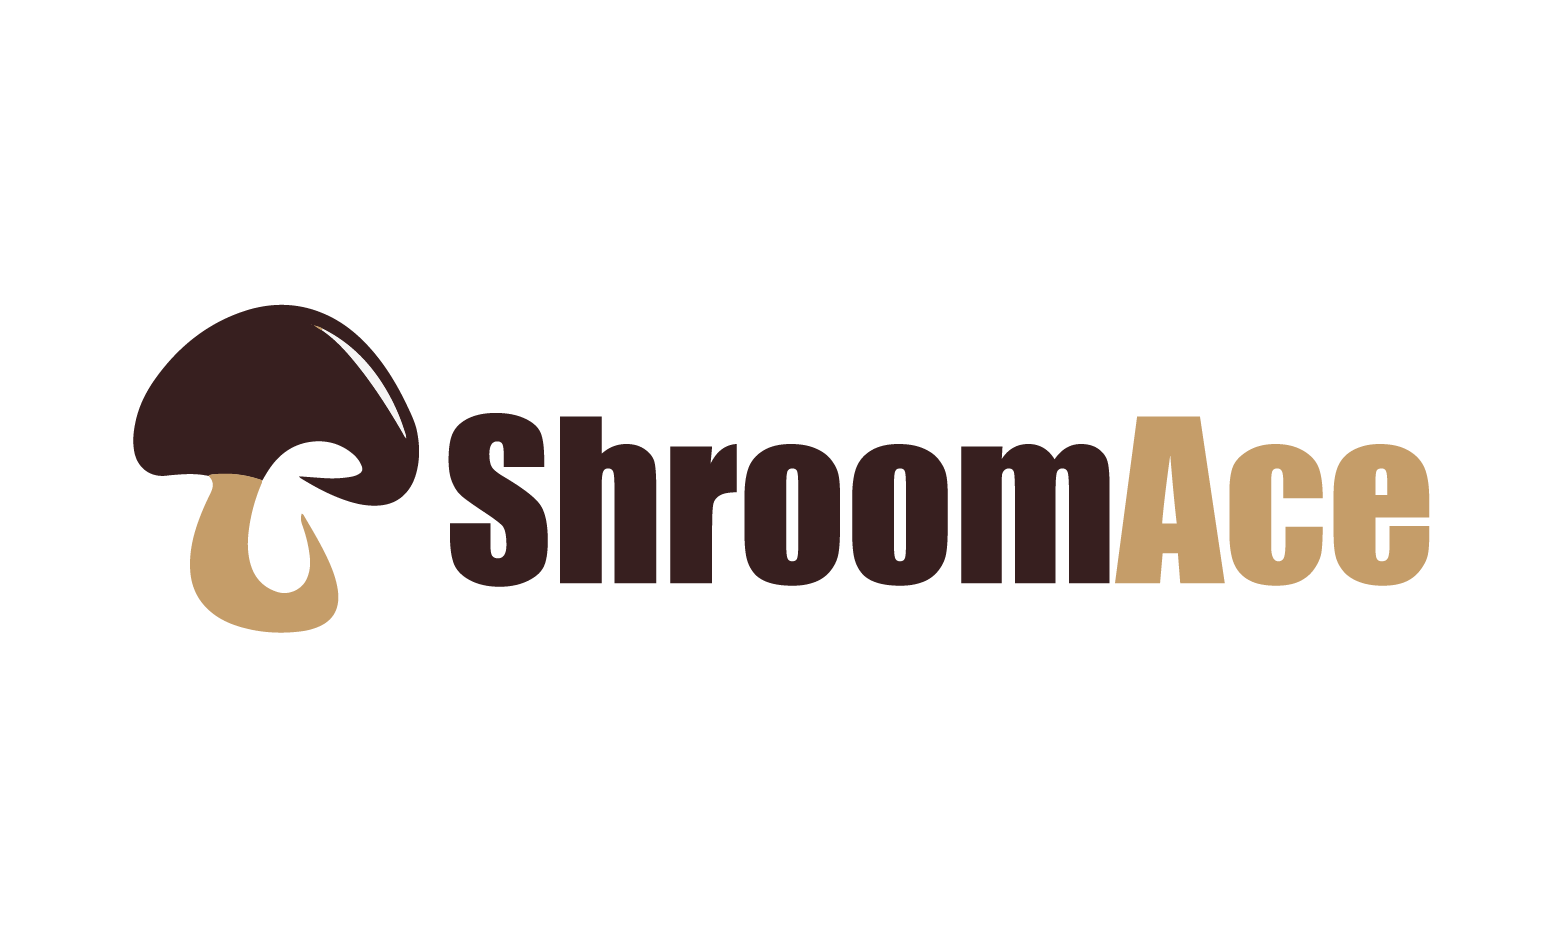 ShroomAce.com - Creative brandable domain for sale